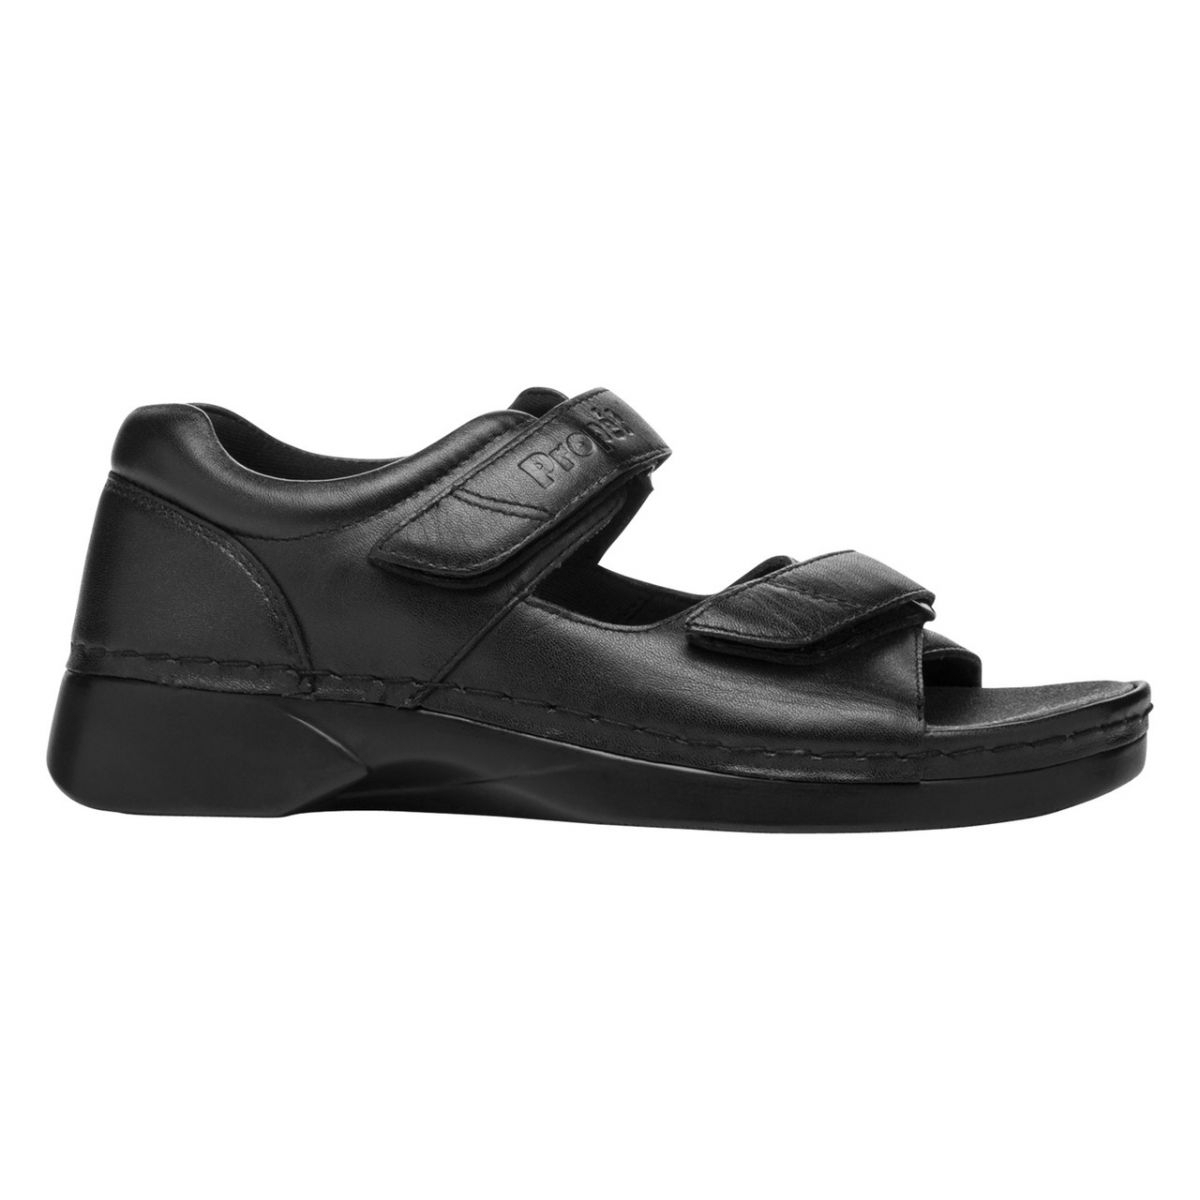 Propet Women's Pedic Walker Sandal Black - W0089B BLACK - BLACK, 9-W